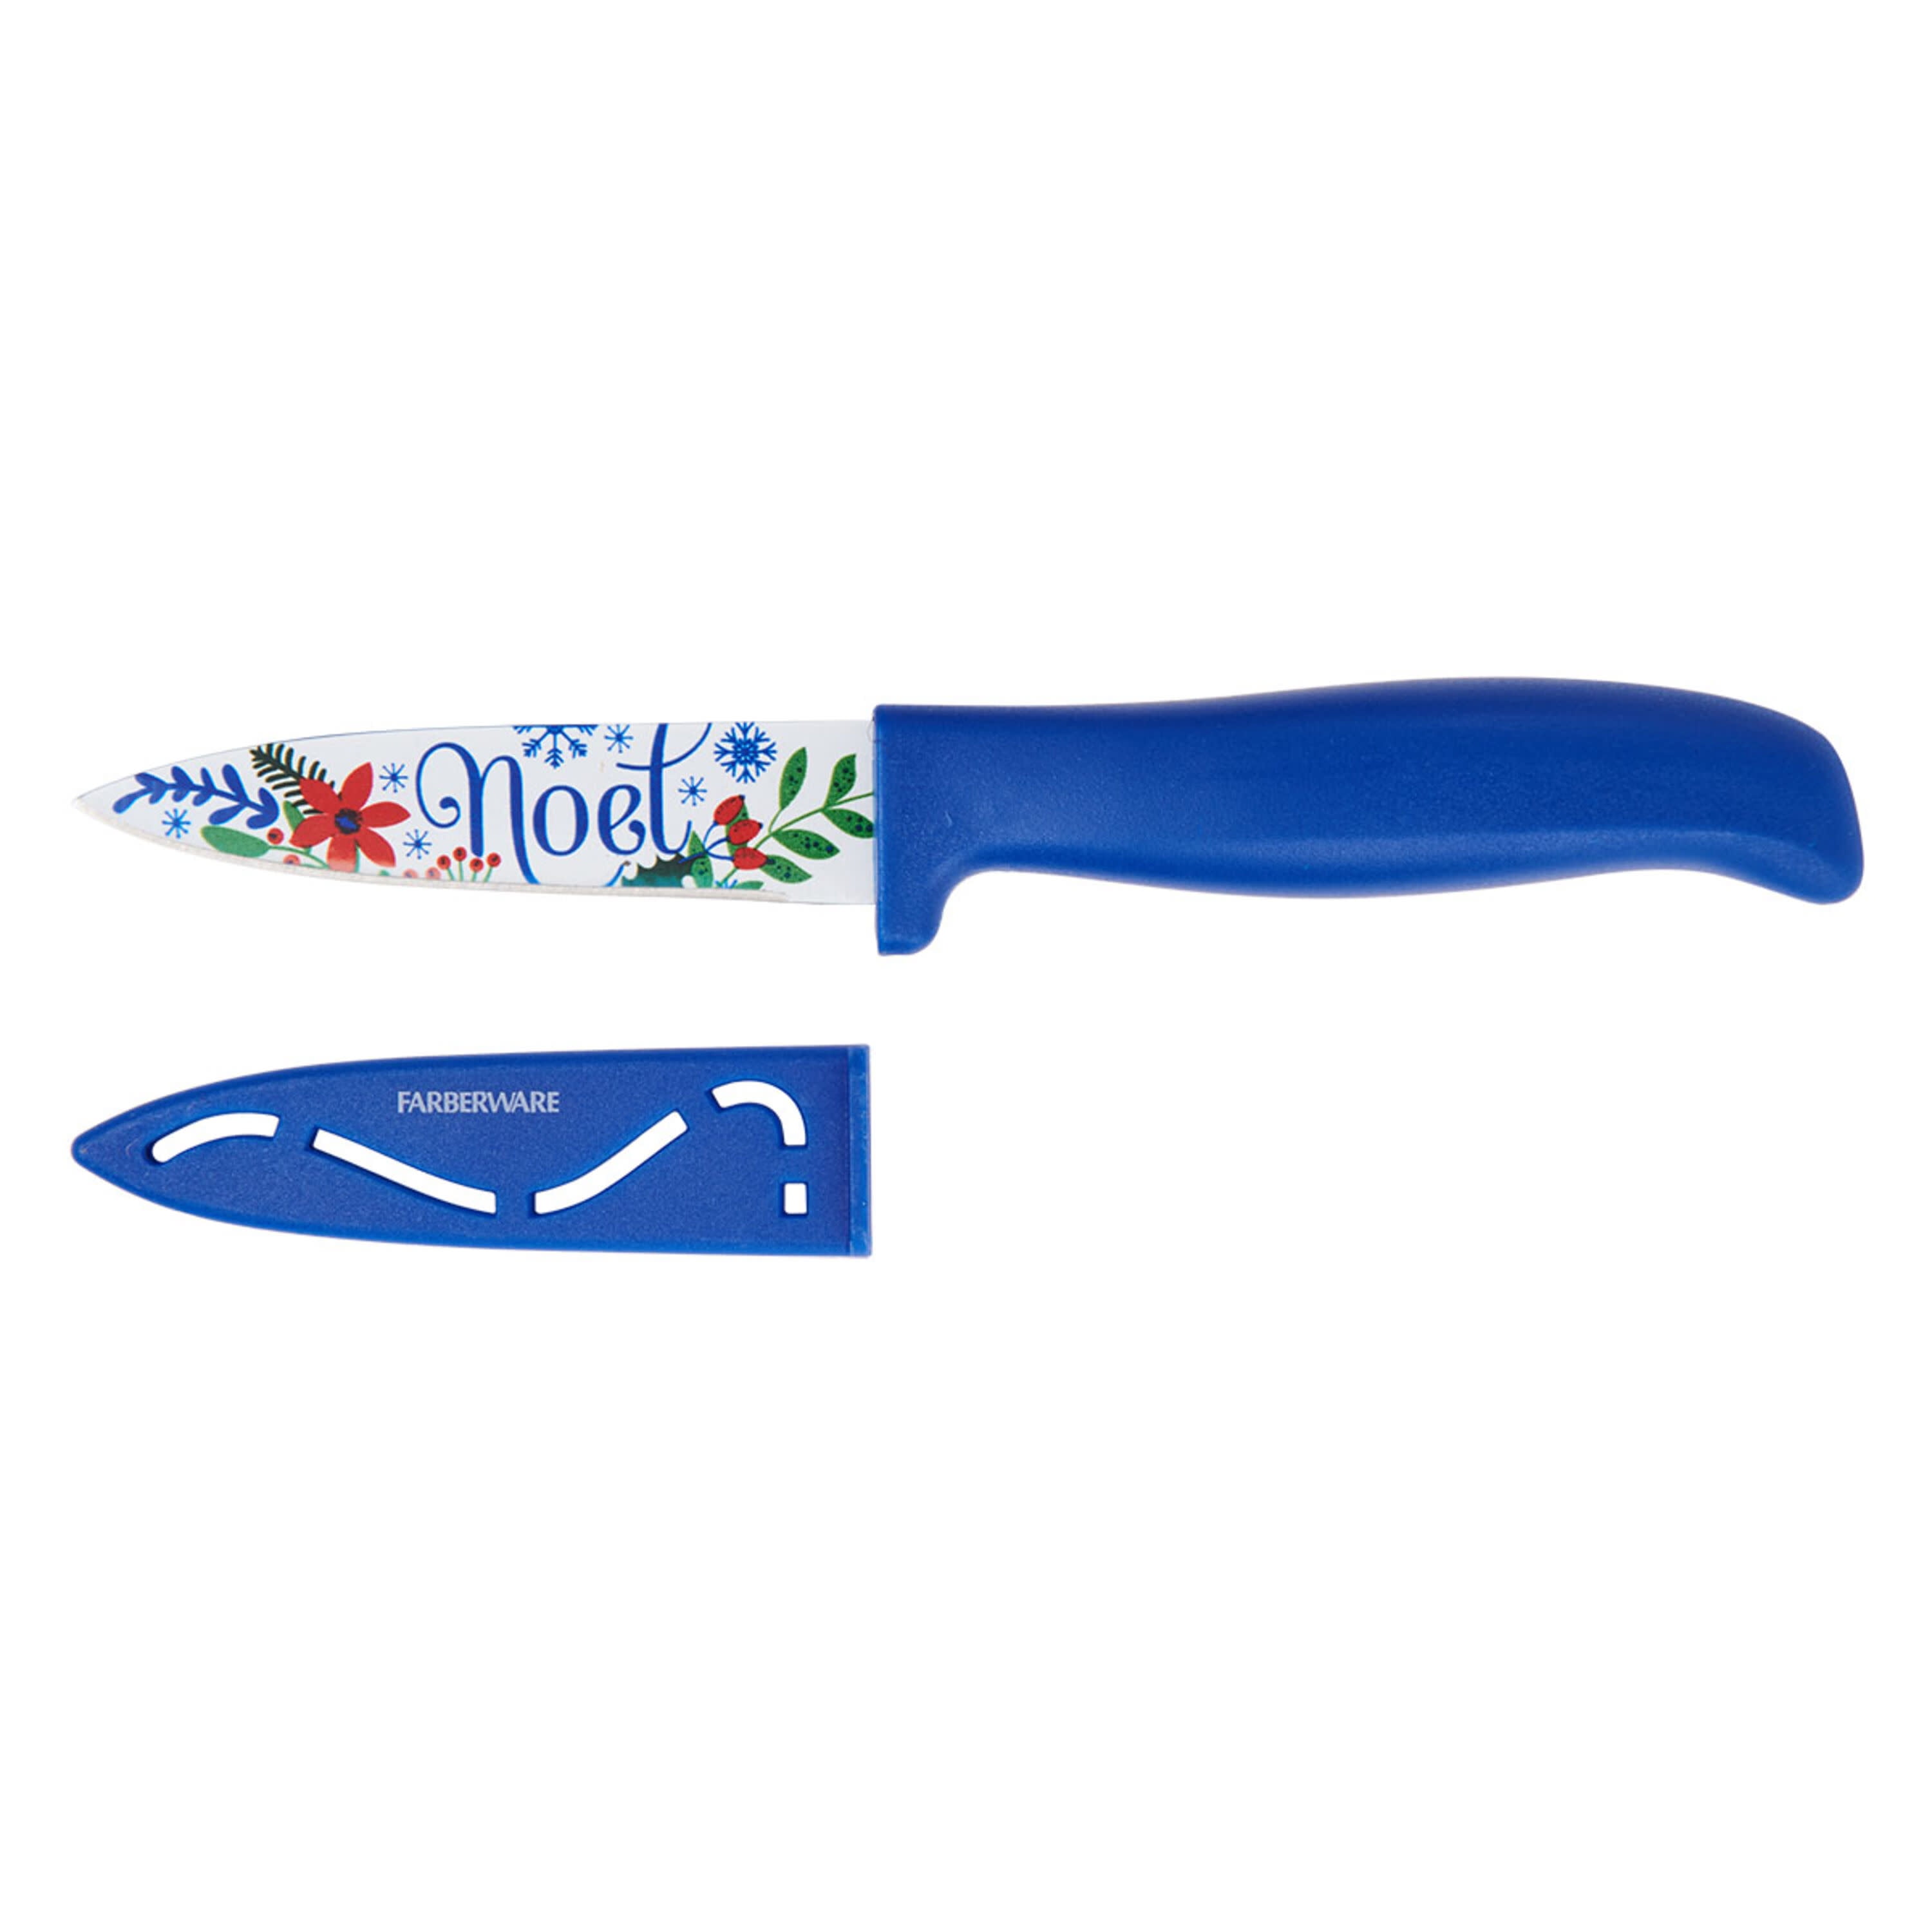 Farberware Precise Slice Parer Knife Set, 2 Piece, Blue